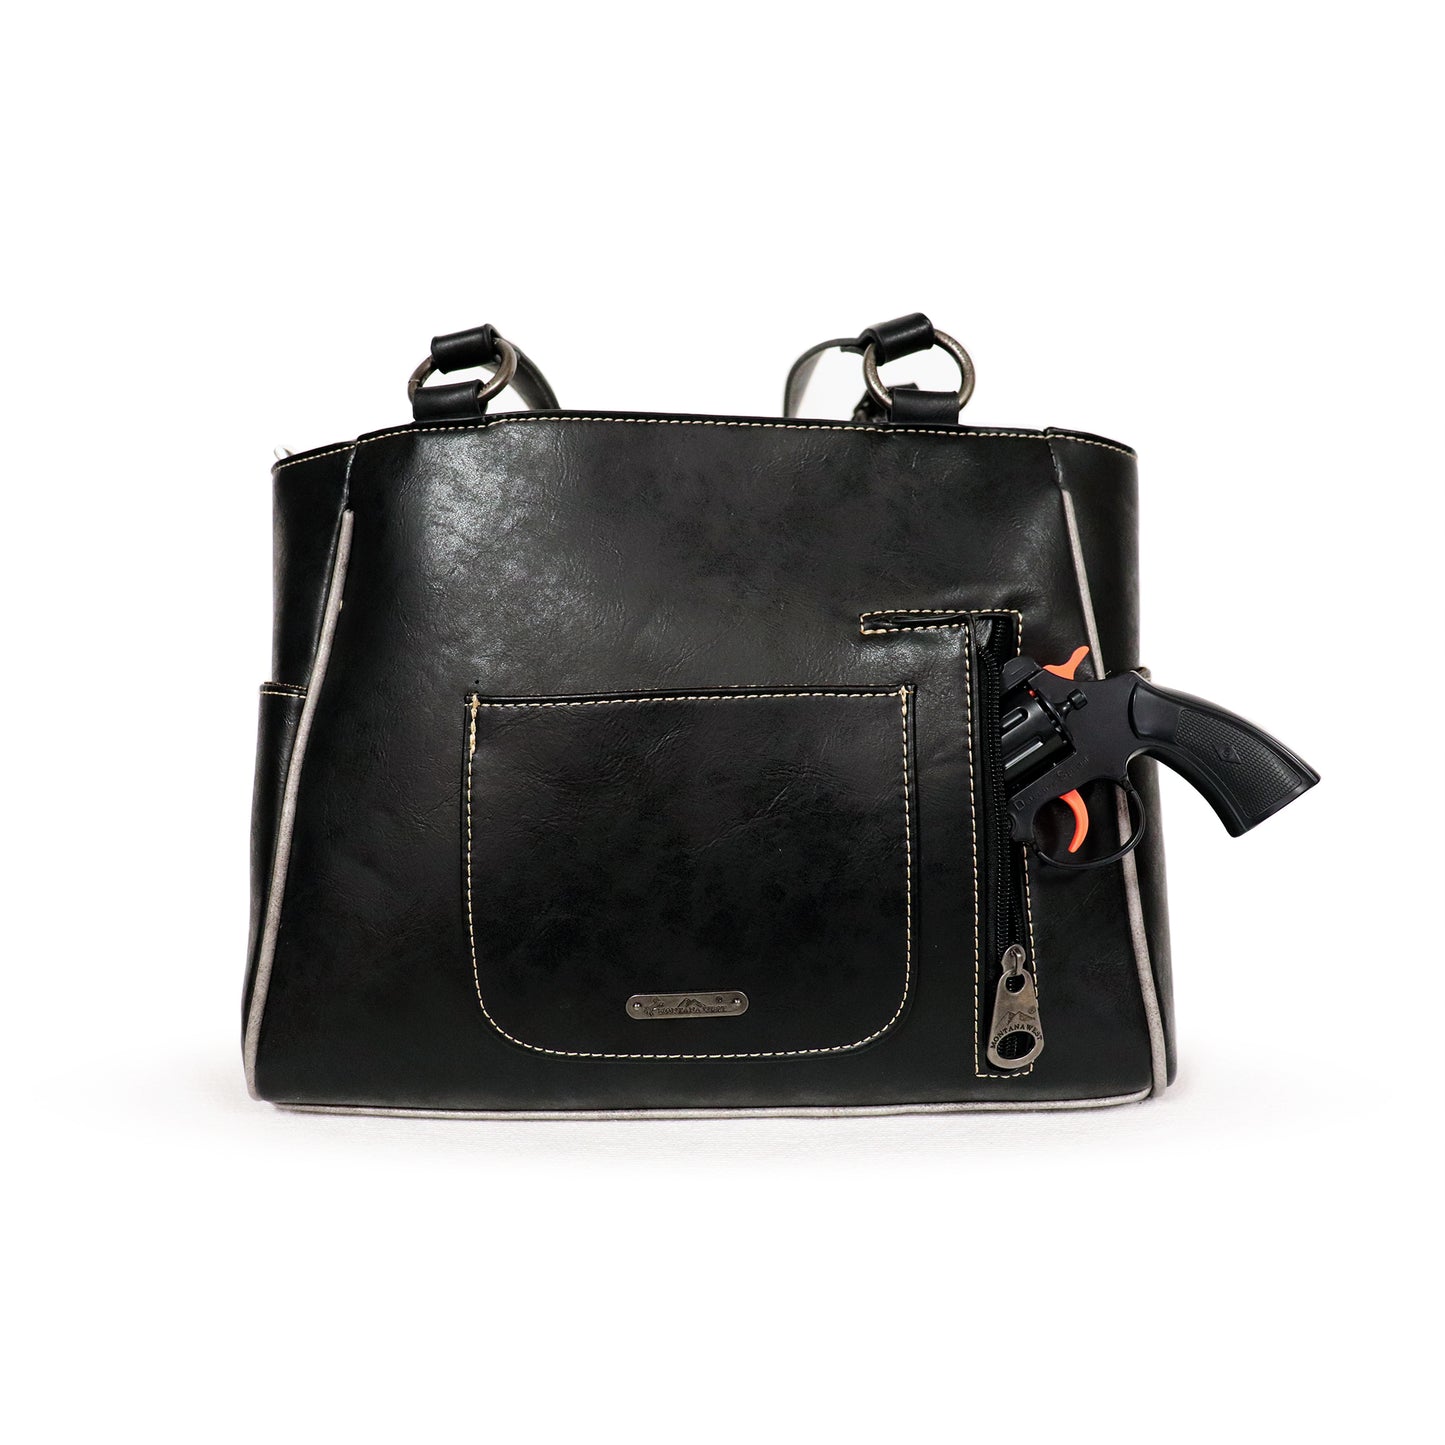 Montana West - Black Embroidered Handbag